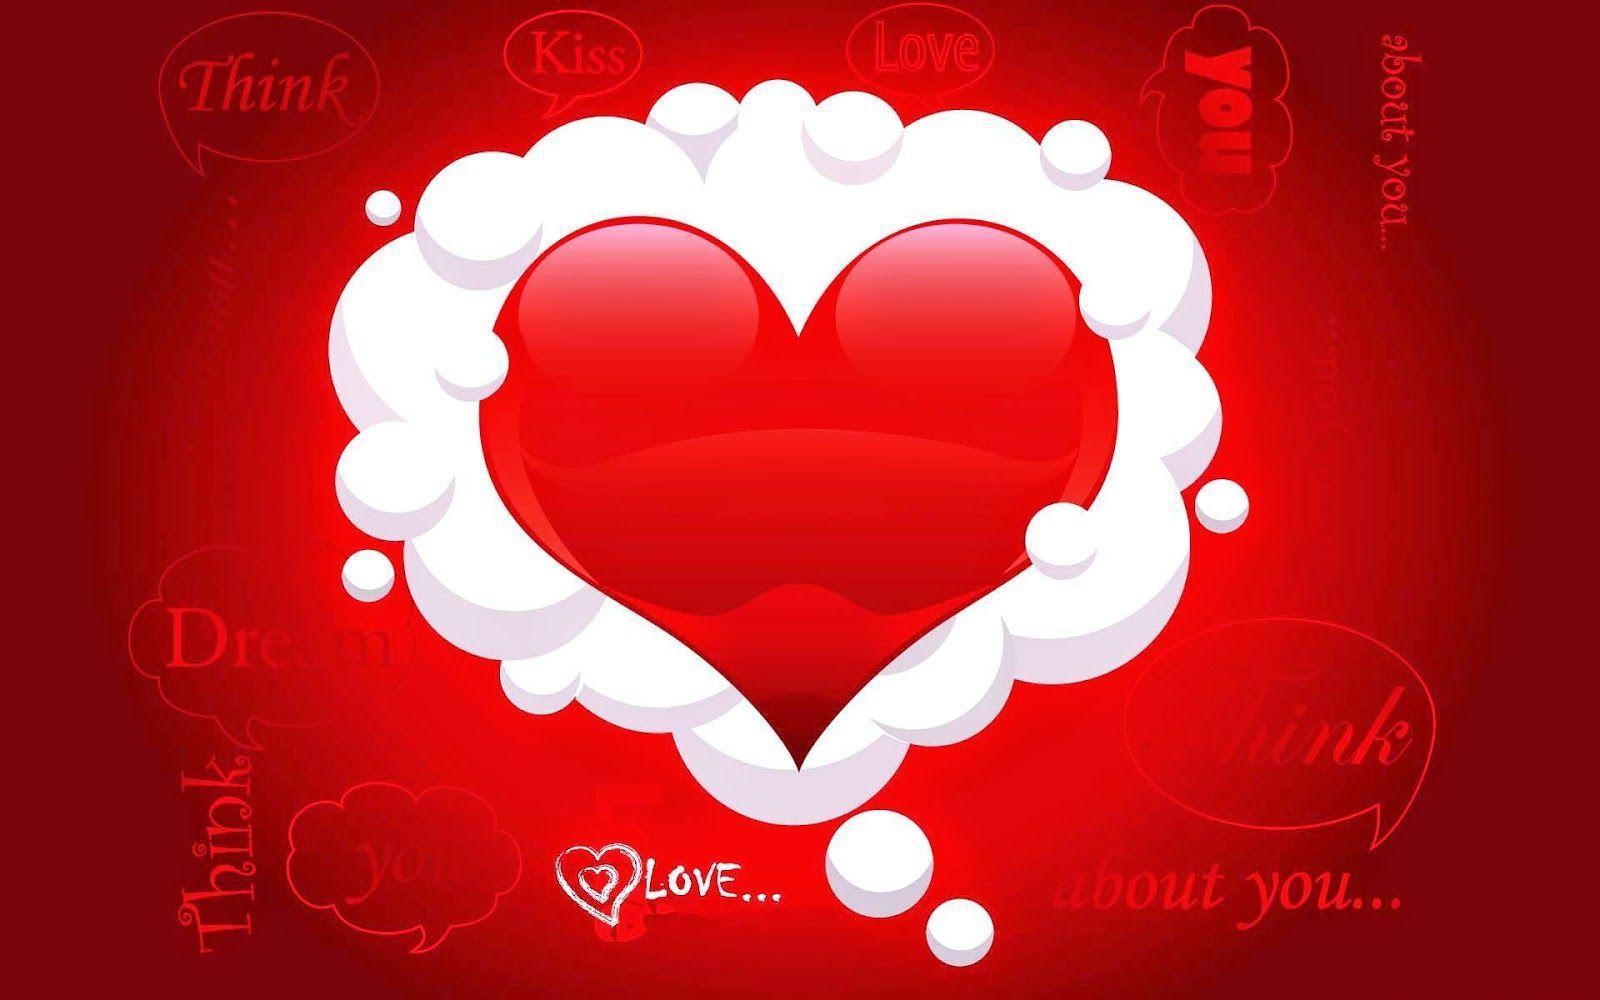 Happy Valentine&;s Day 2015 HD Image, Wishes, Love Couple PicsHD